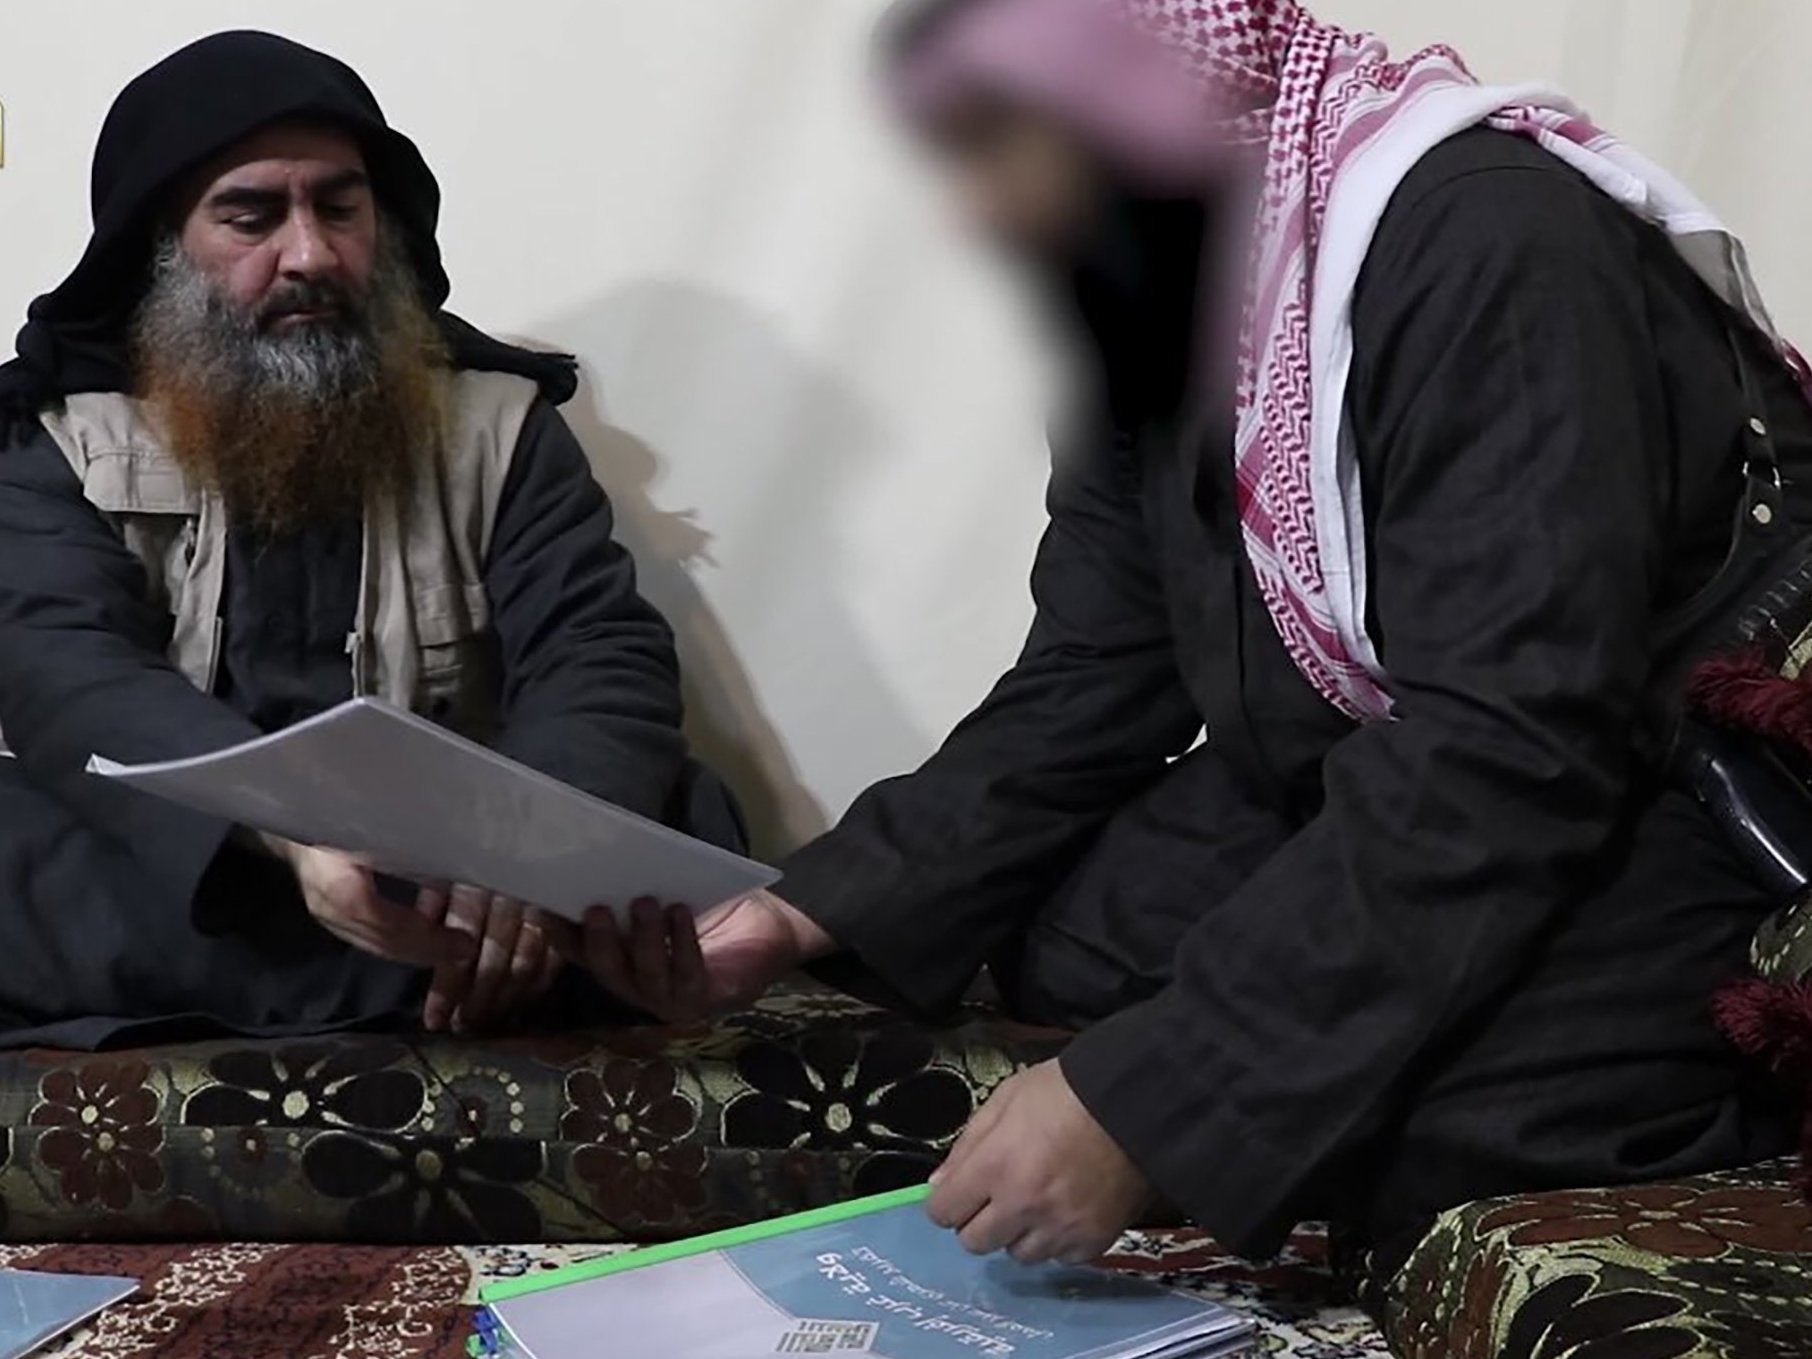 static.independent.co.uk/s3fs-public/thumbnails/image/2019/04/29/19/Abu-Bakr-al-Baghdadi-video